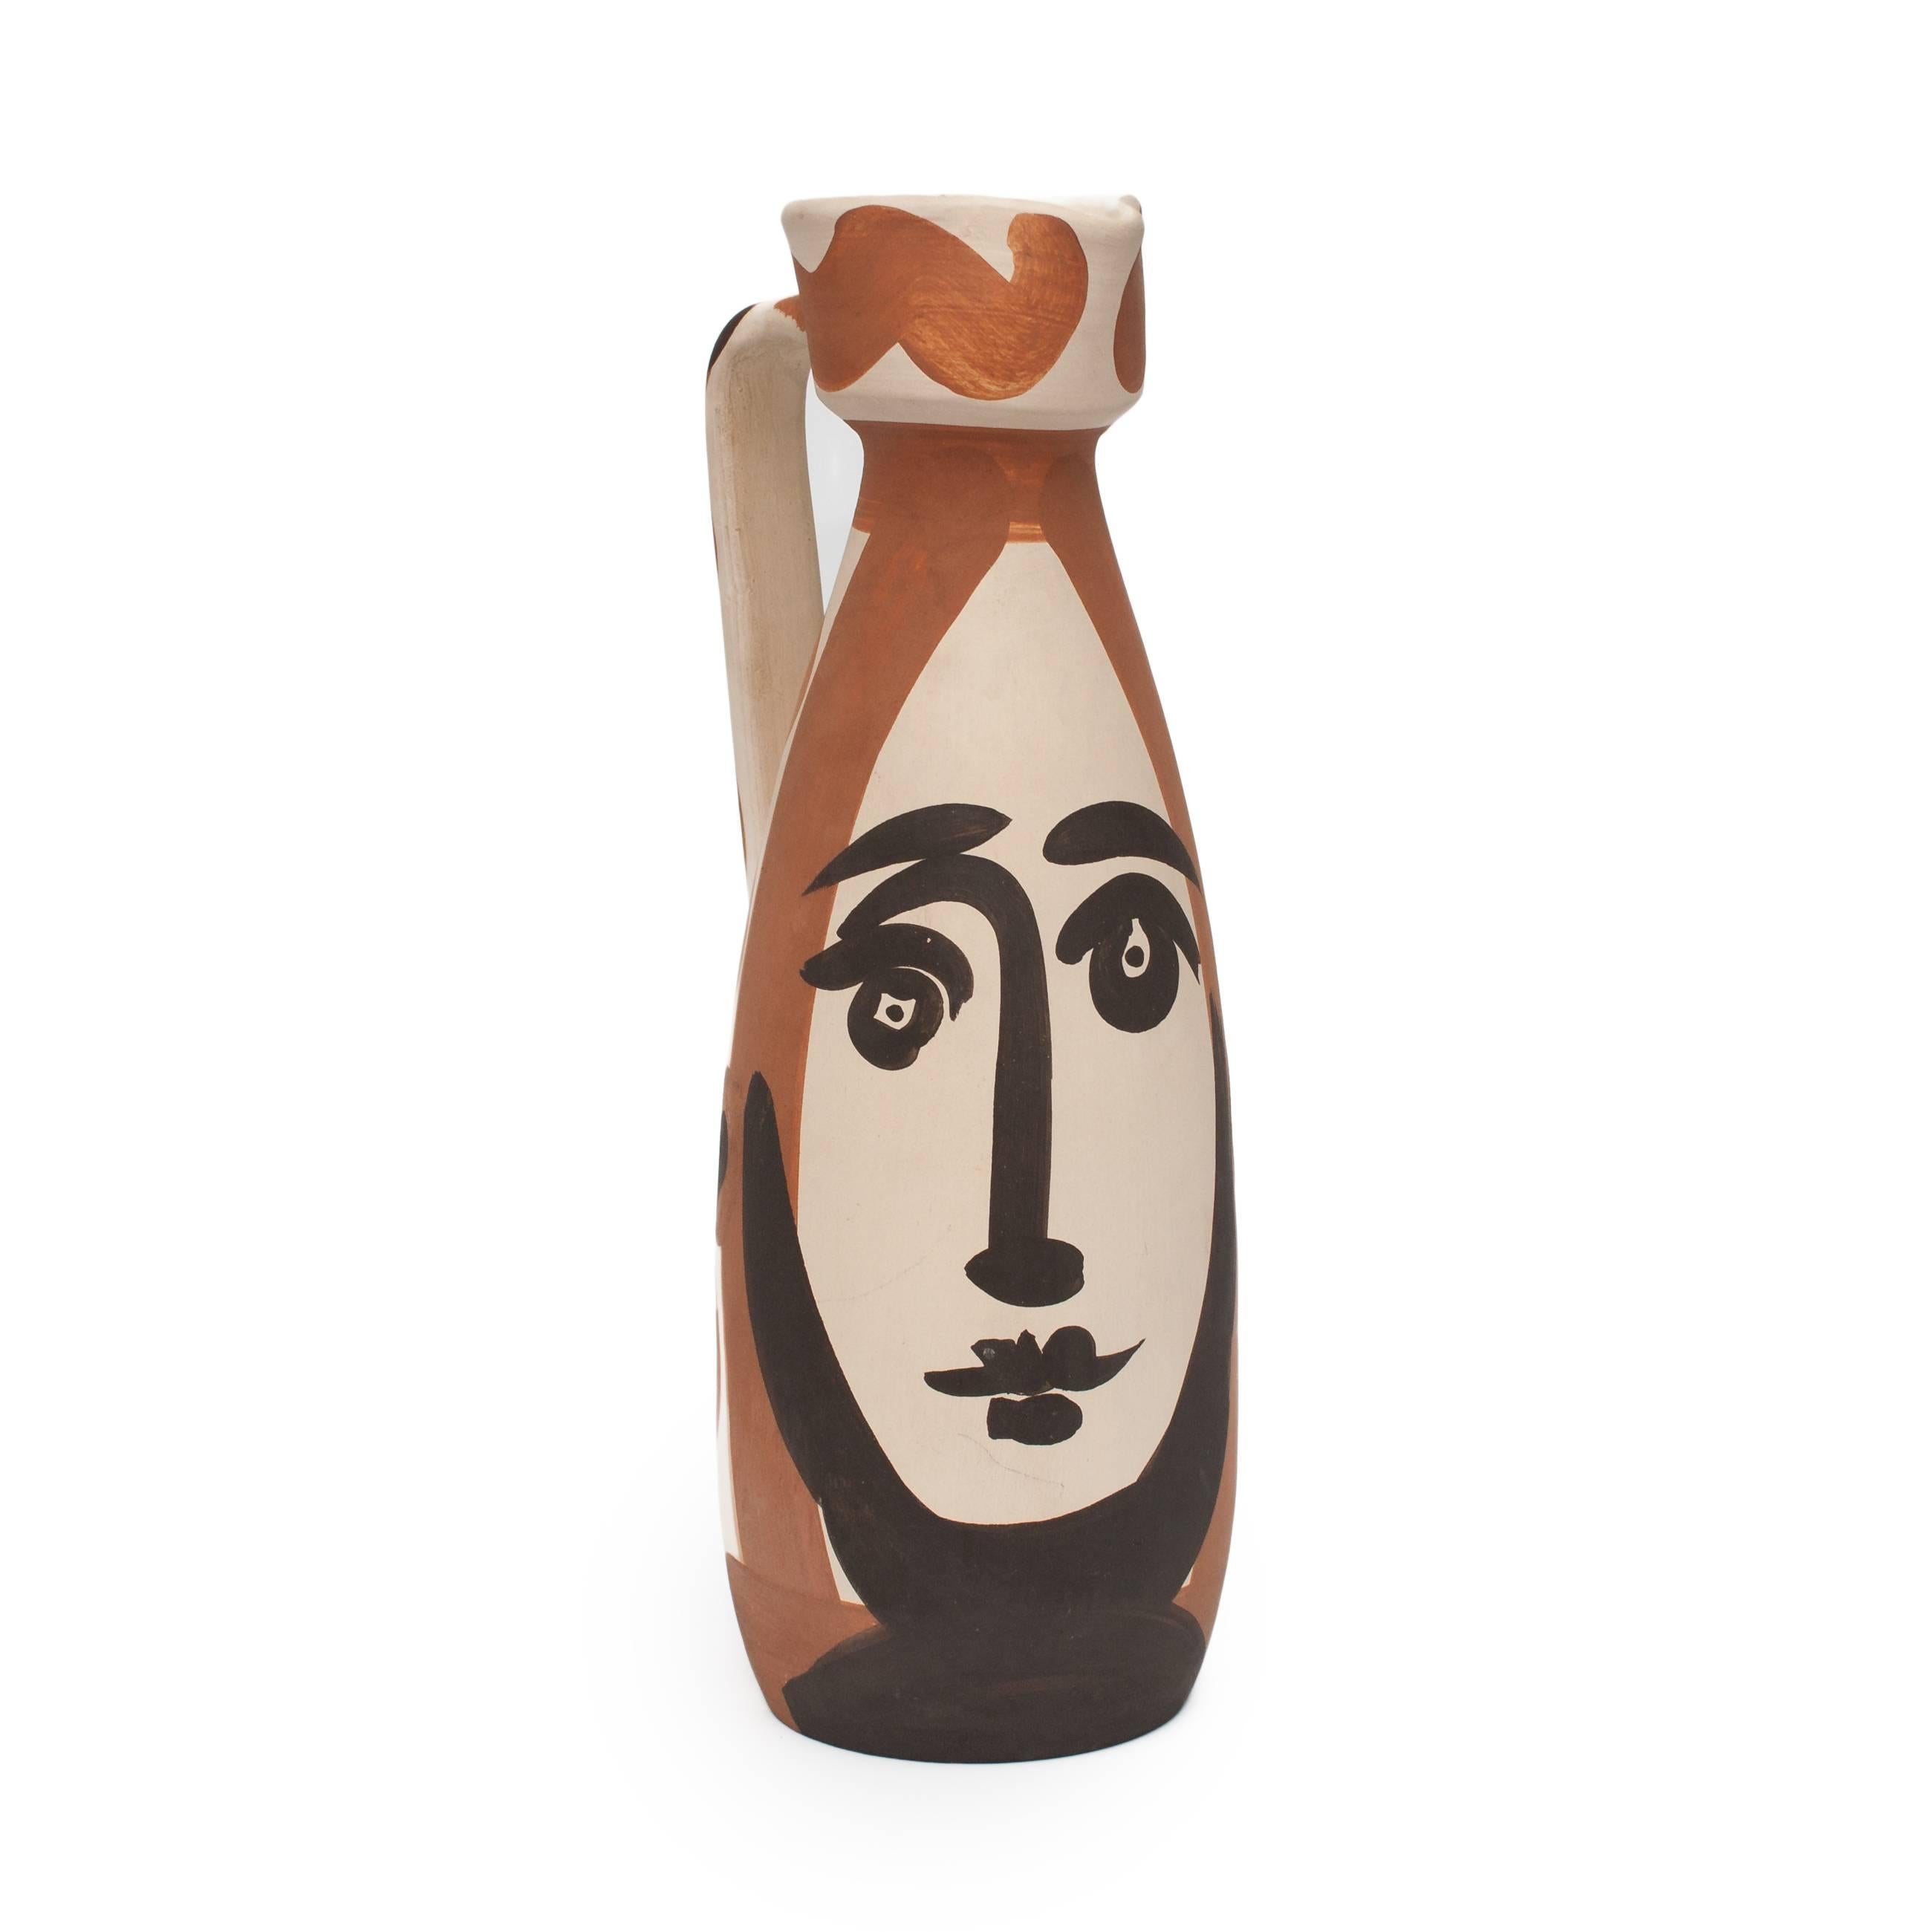 "Femme" Ceramic Pitcher - Art by Pablo Picasso